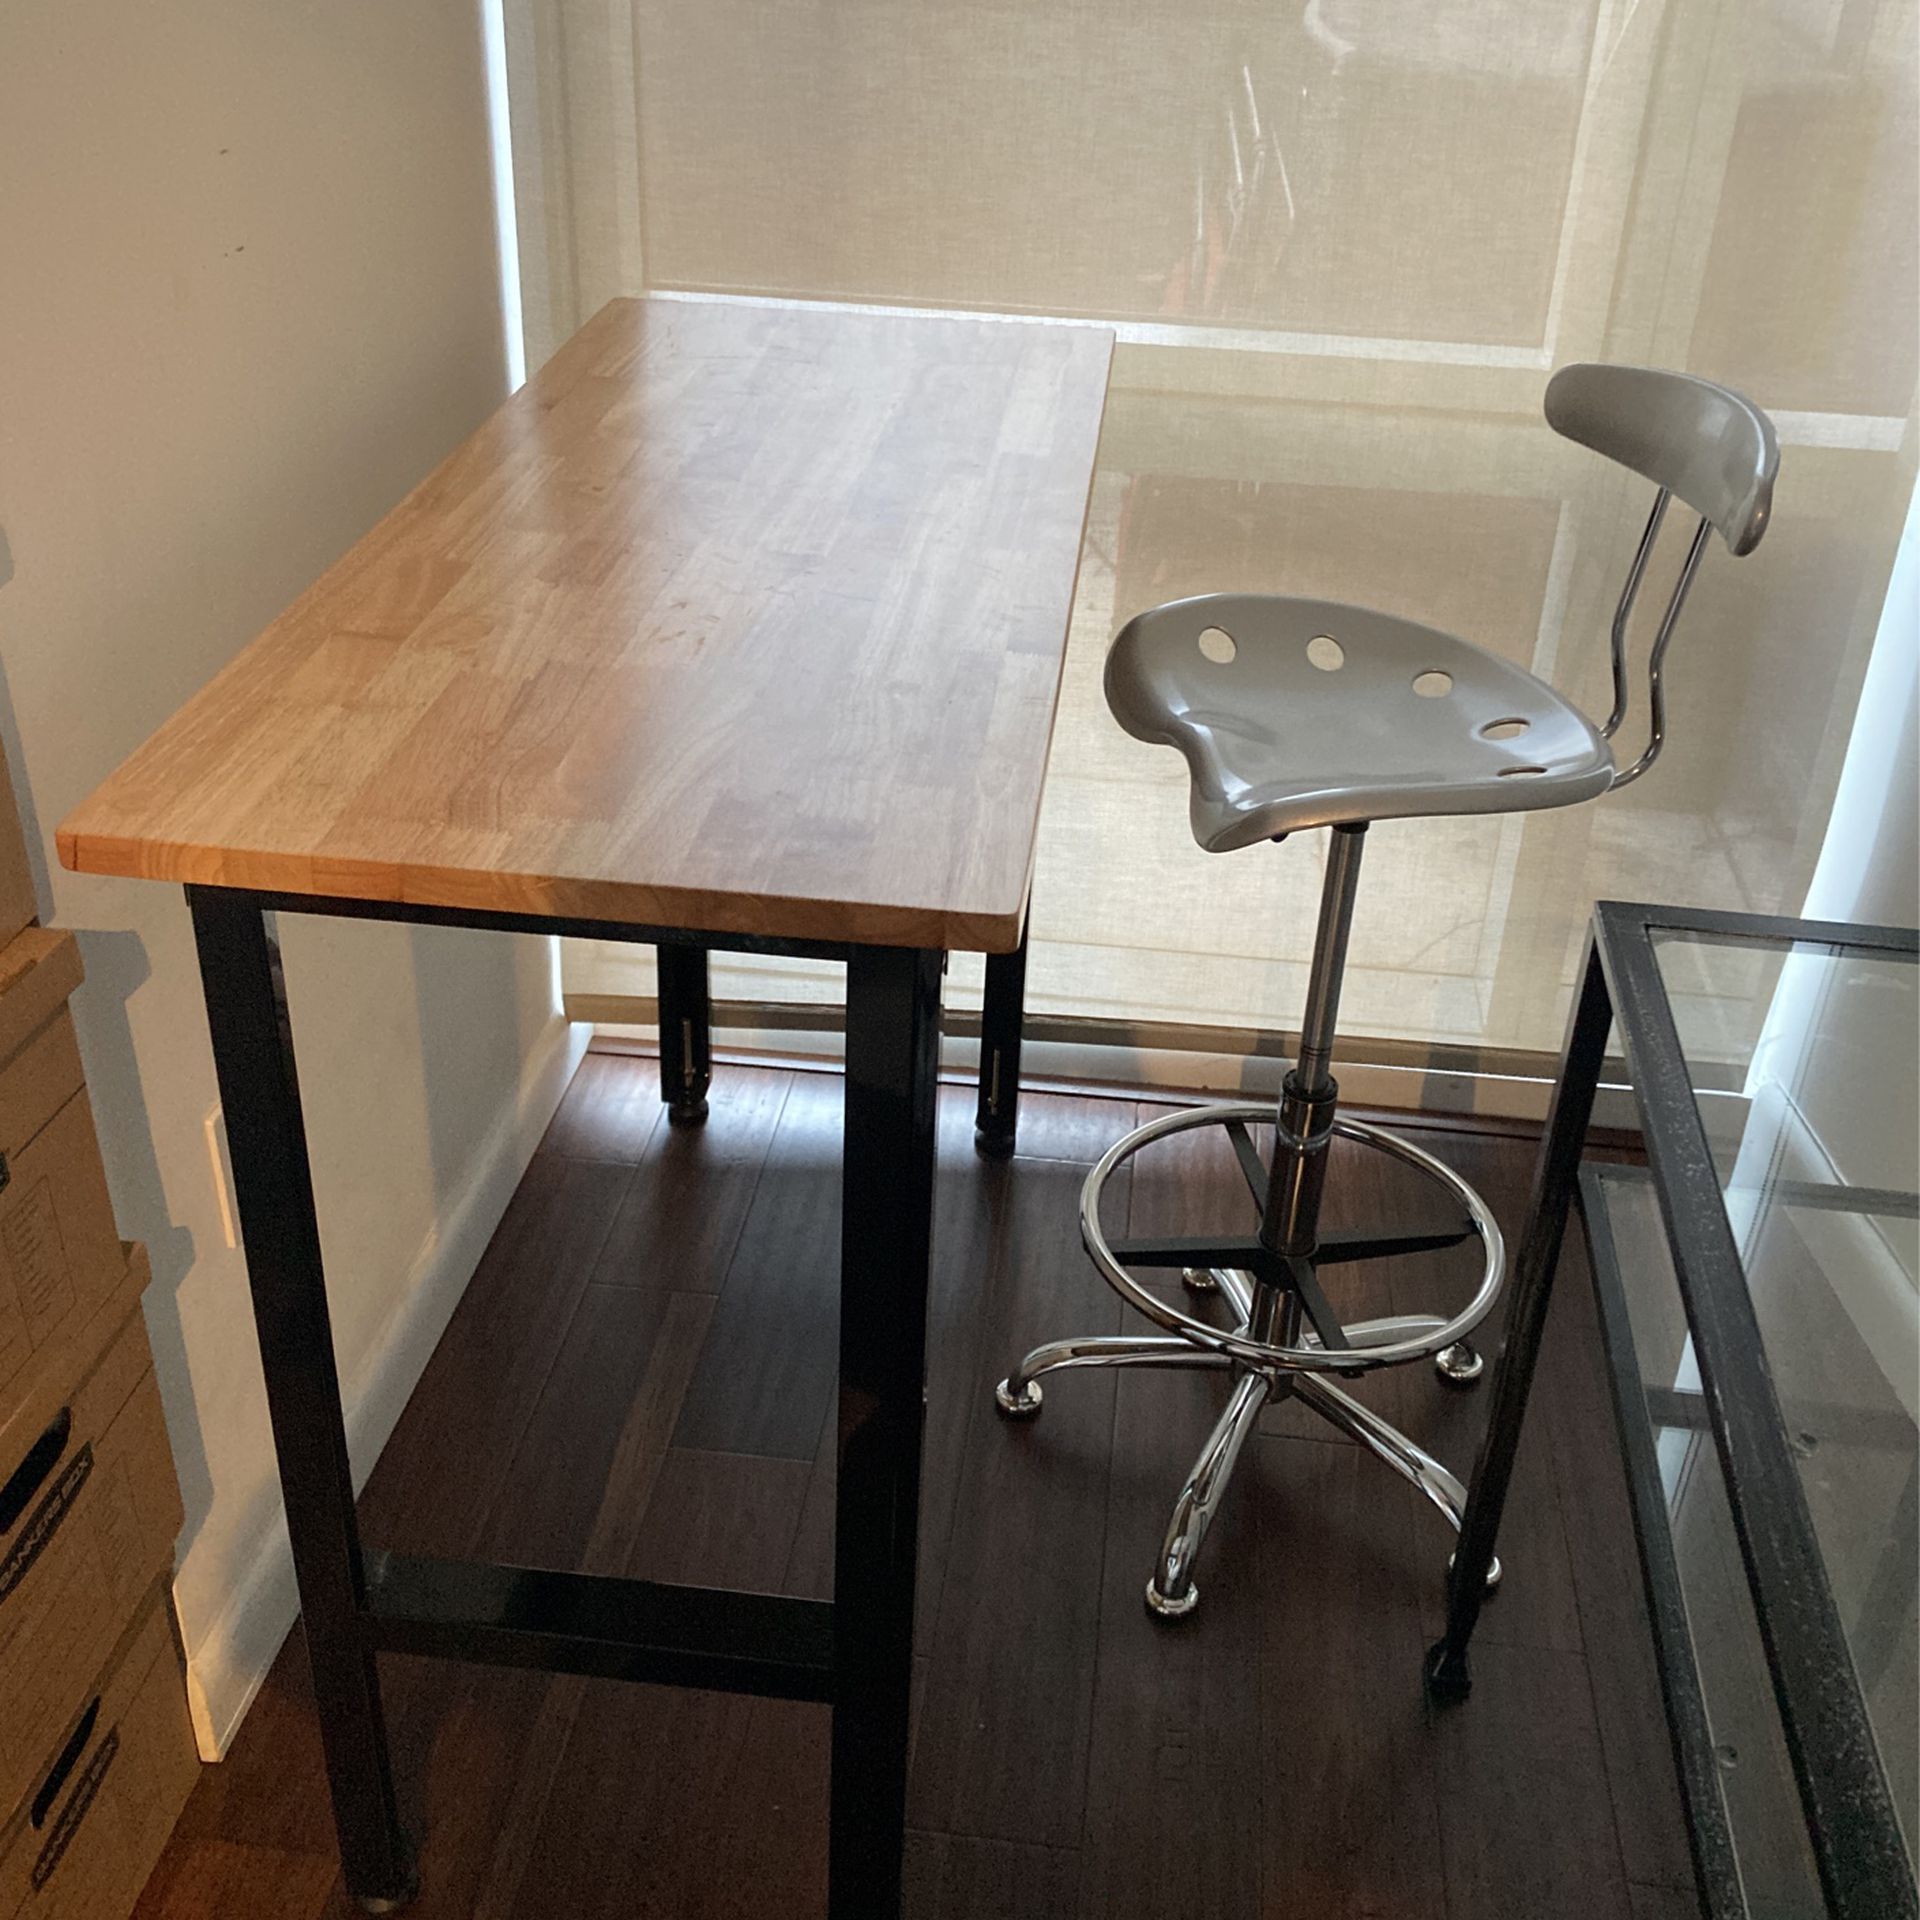 REDUCED_$30_Husky Work table/ Standing Desk (+ Free Barstool)!